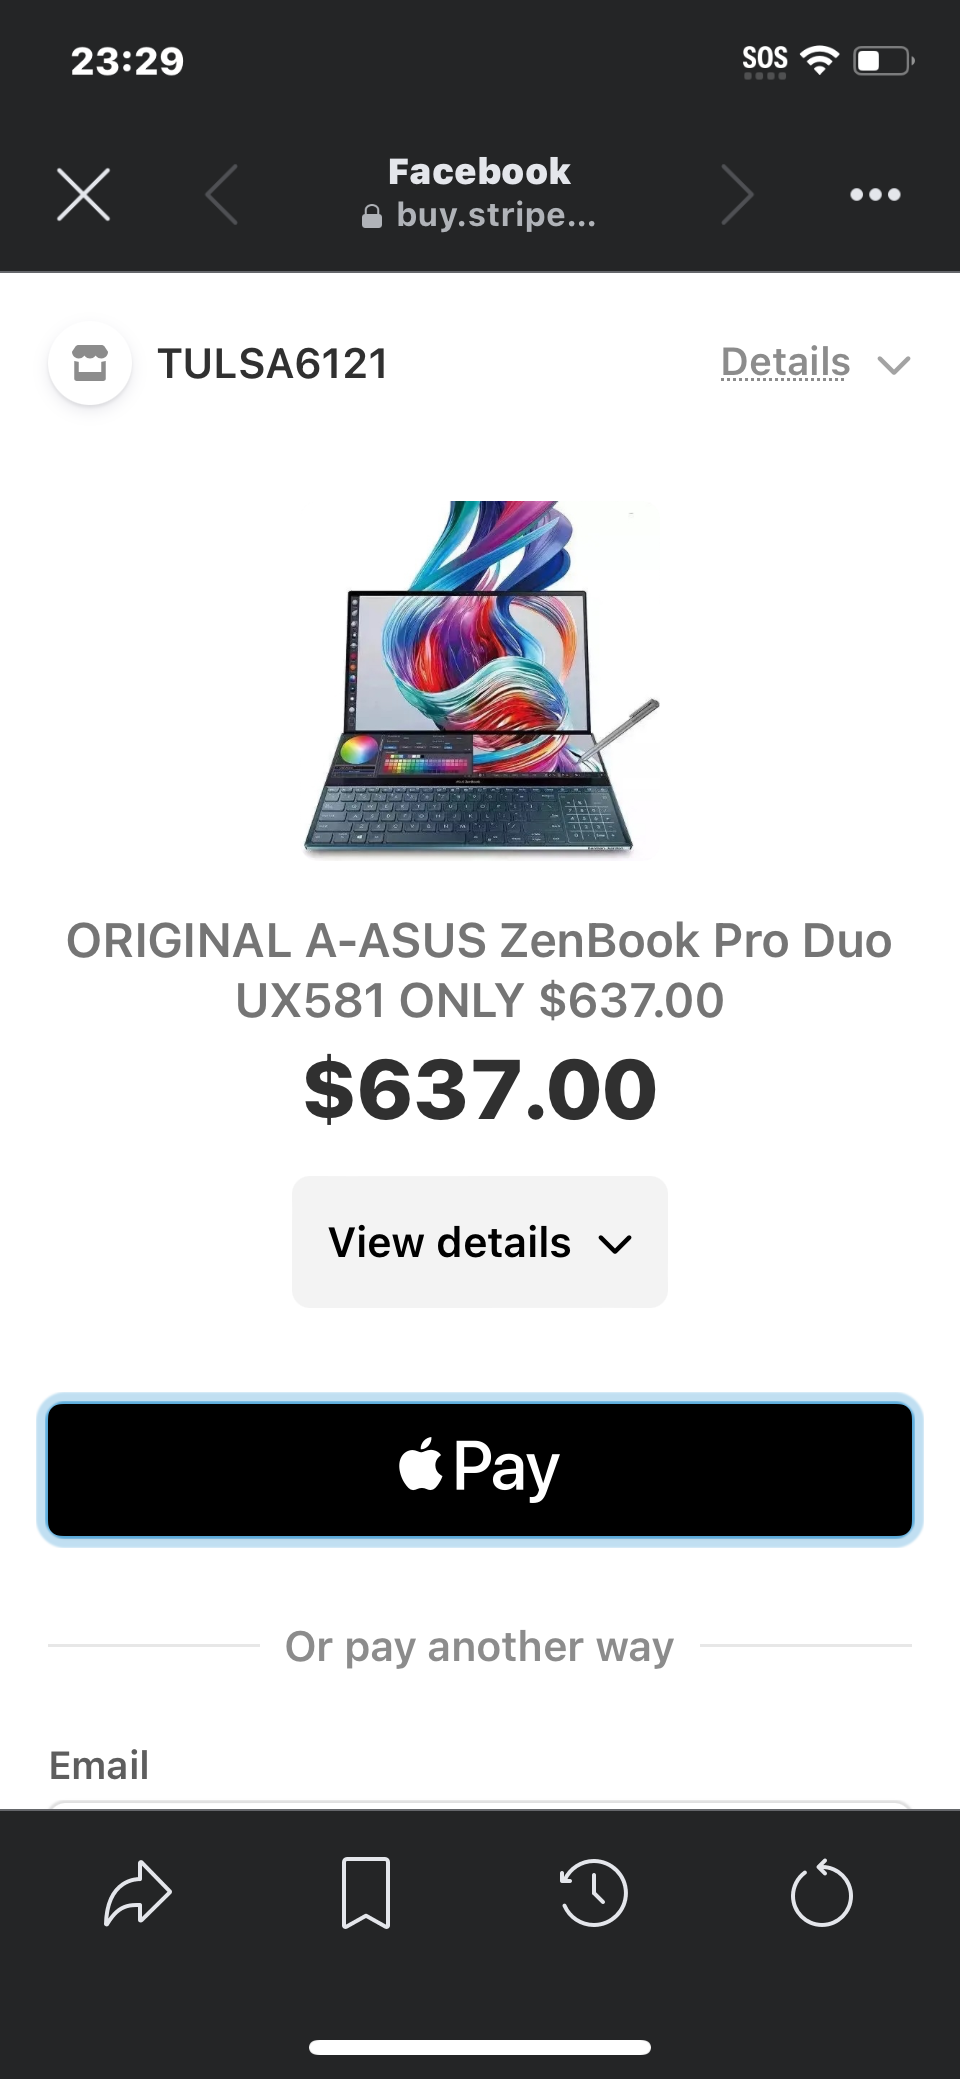 ORIGINAL A-ASUS ZenBook Pro Duo UX581
ONLY $637.00